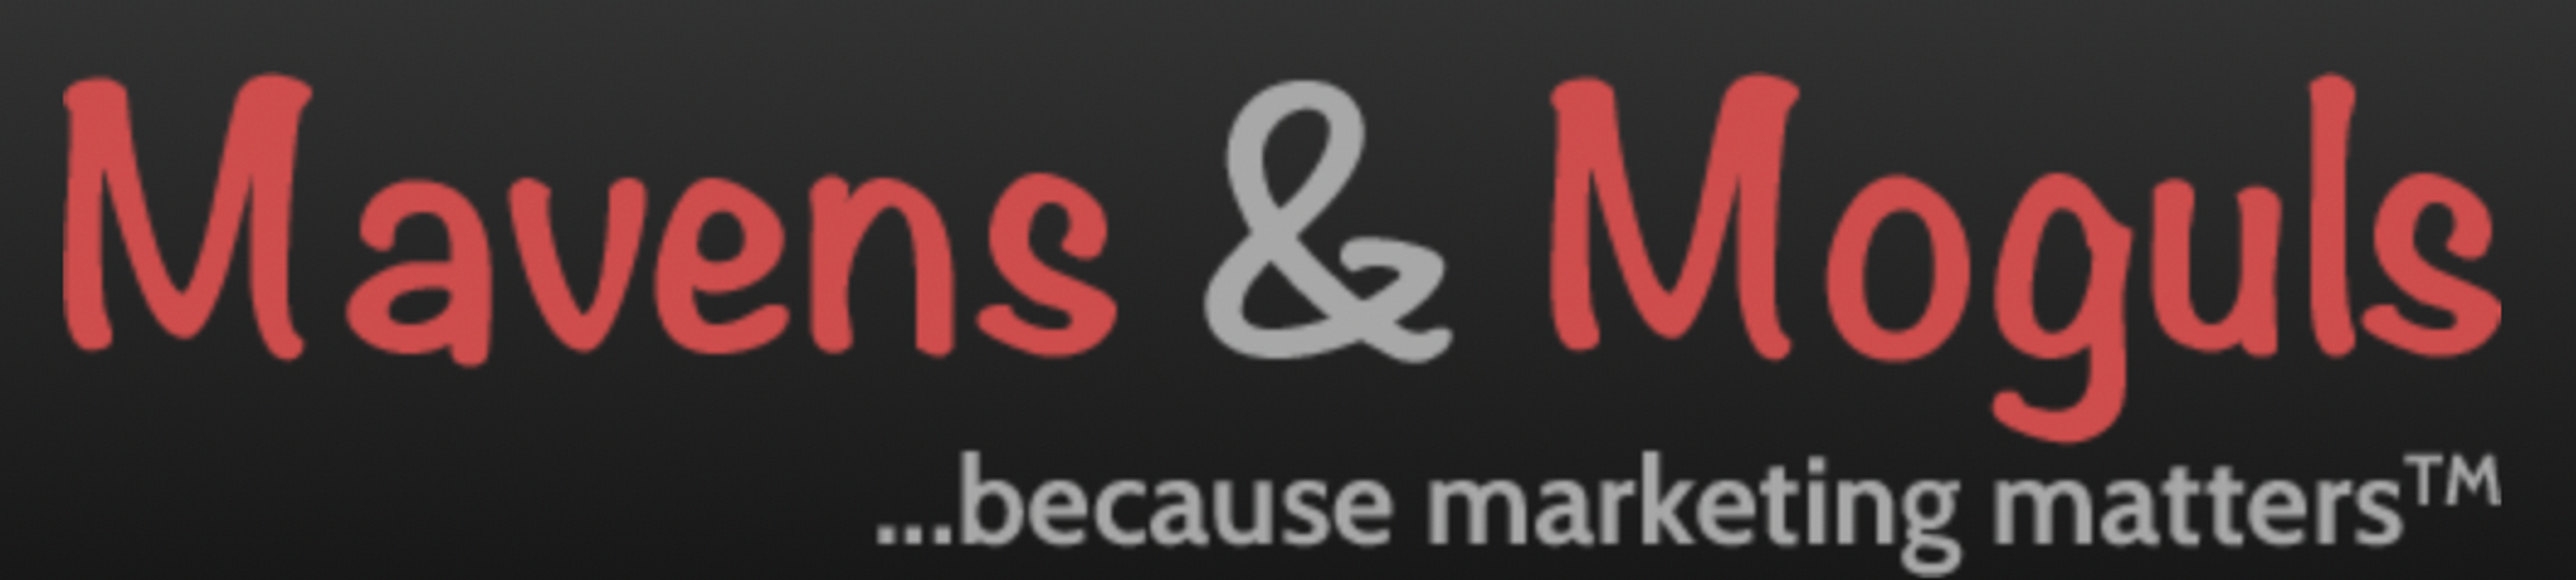 Mavens & Moguls logo design